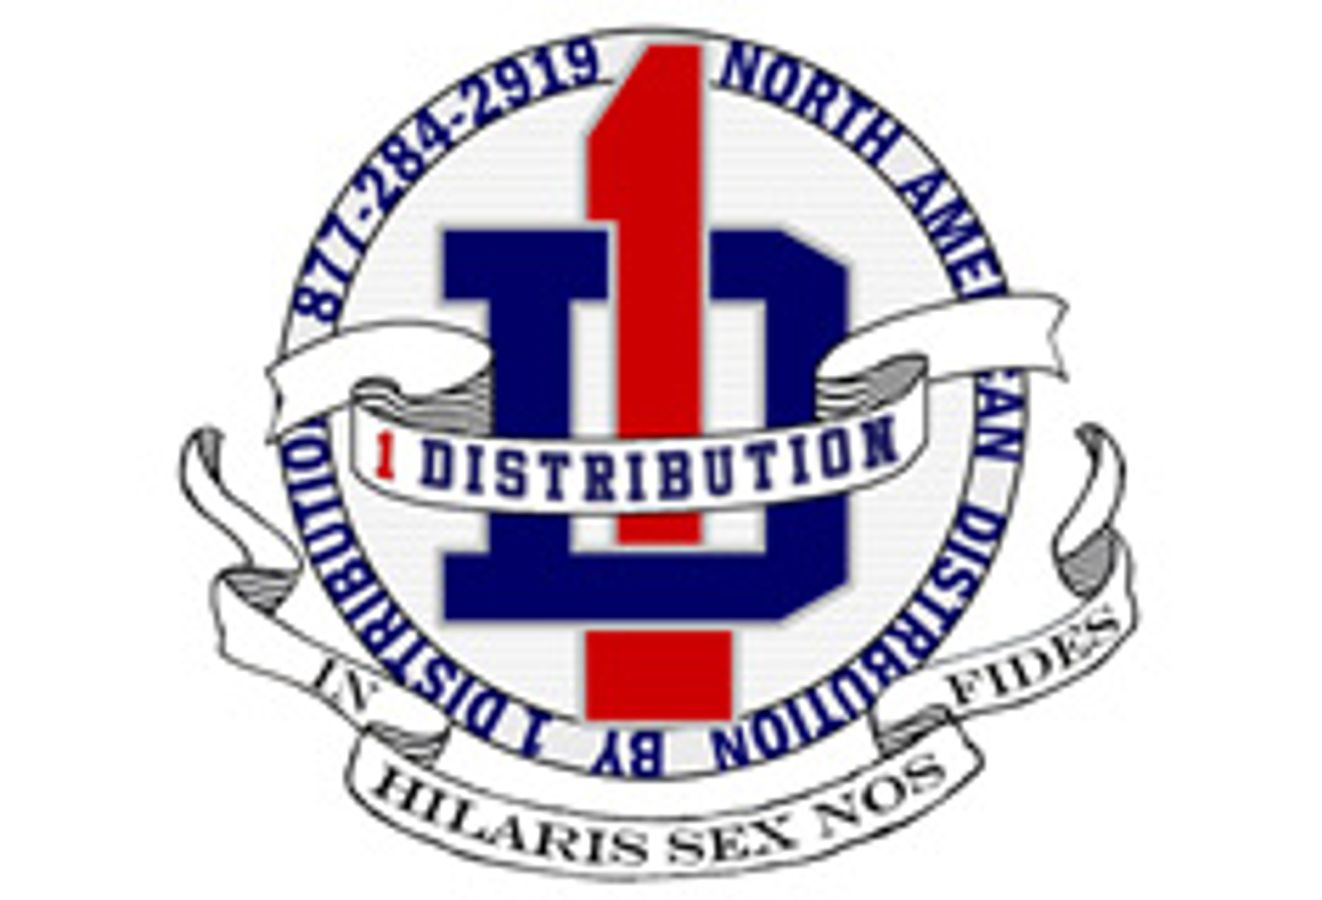 1 Distribution